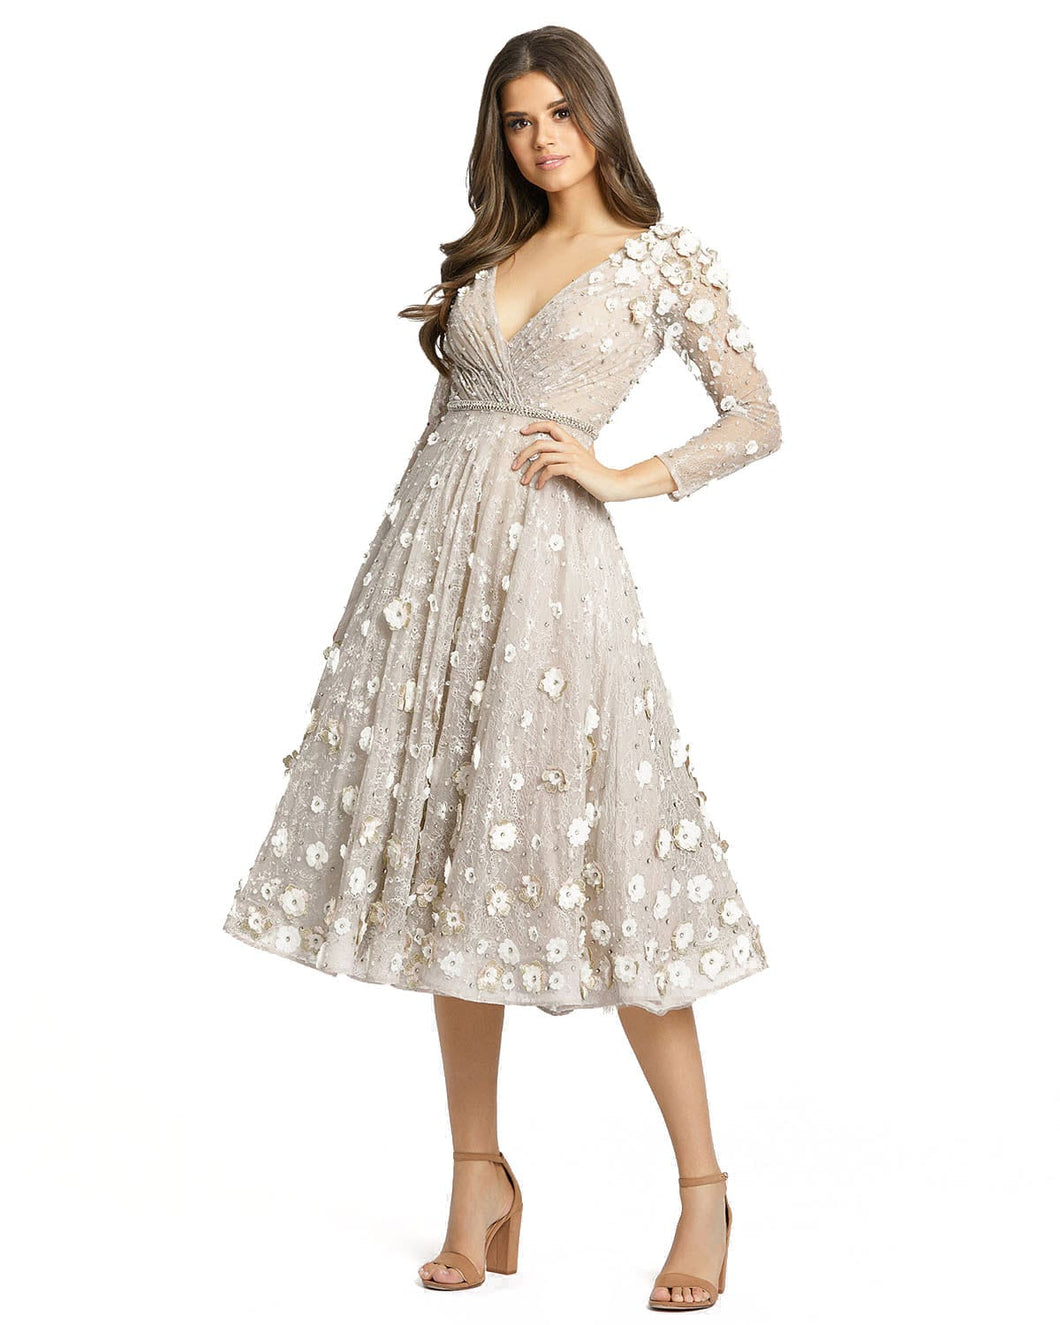 Macduggal 67387 Long Sleeved Tea Length dress with Floral detail